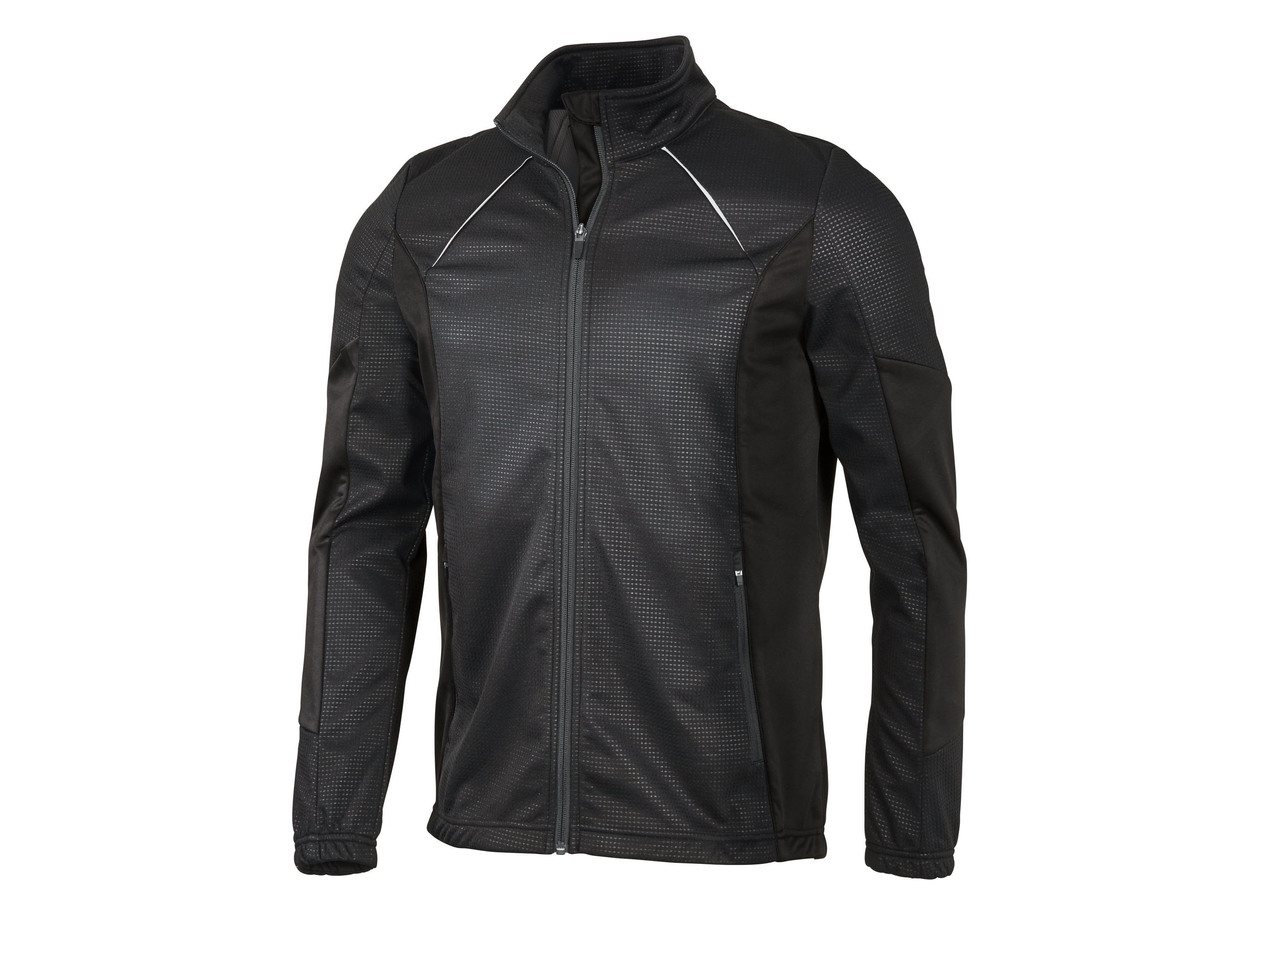 Men's Softshell Cycling Jacket